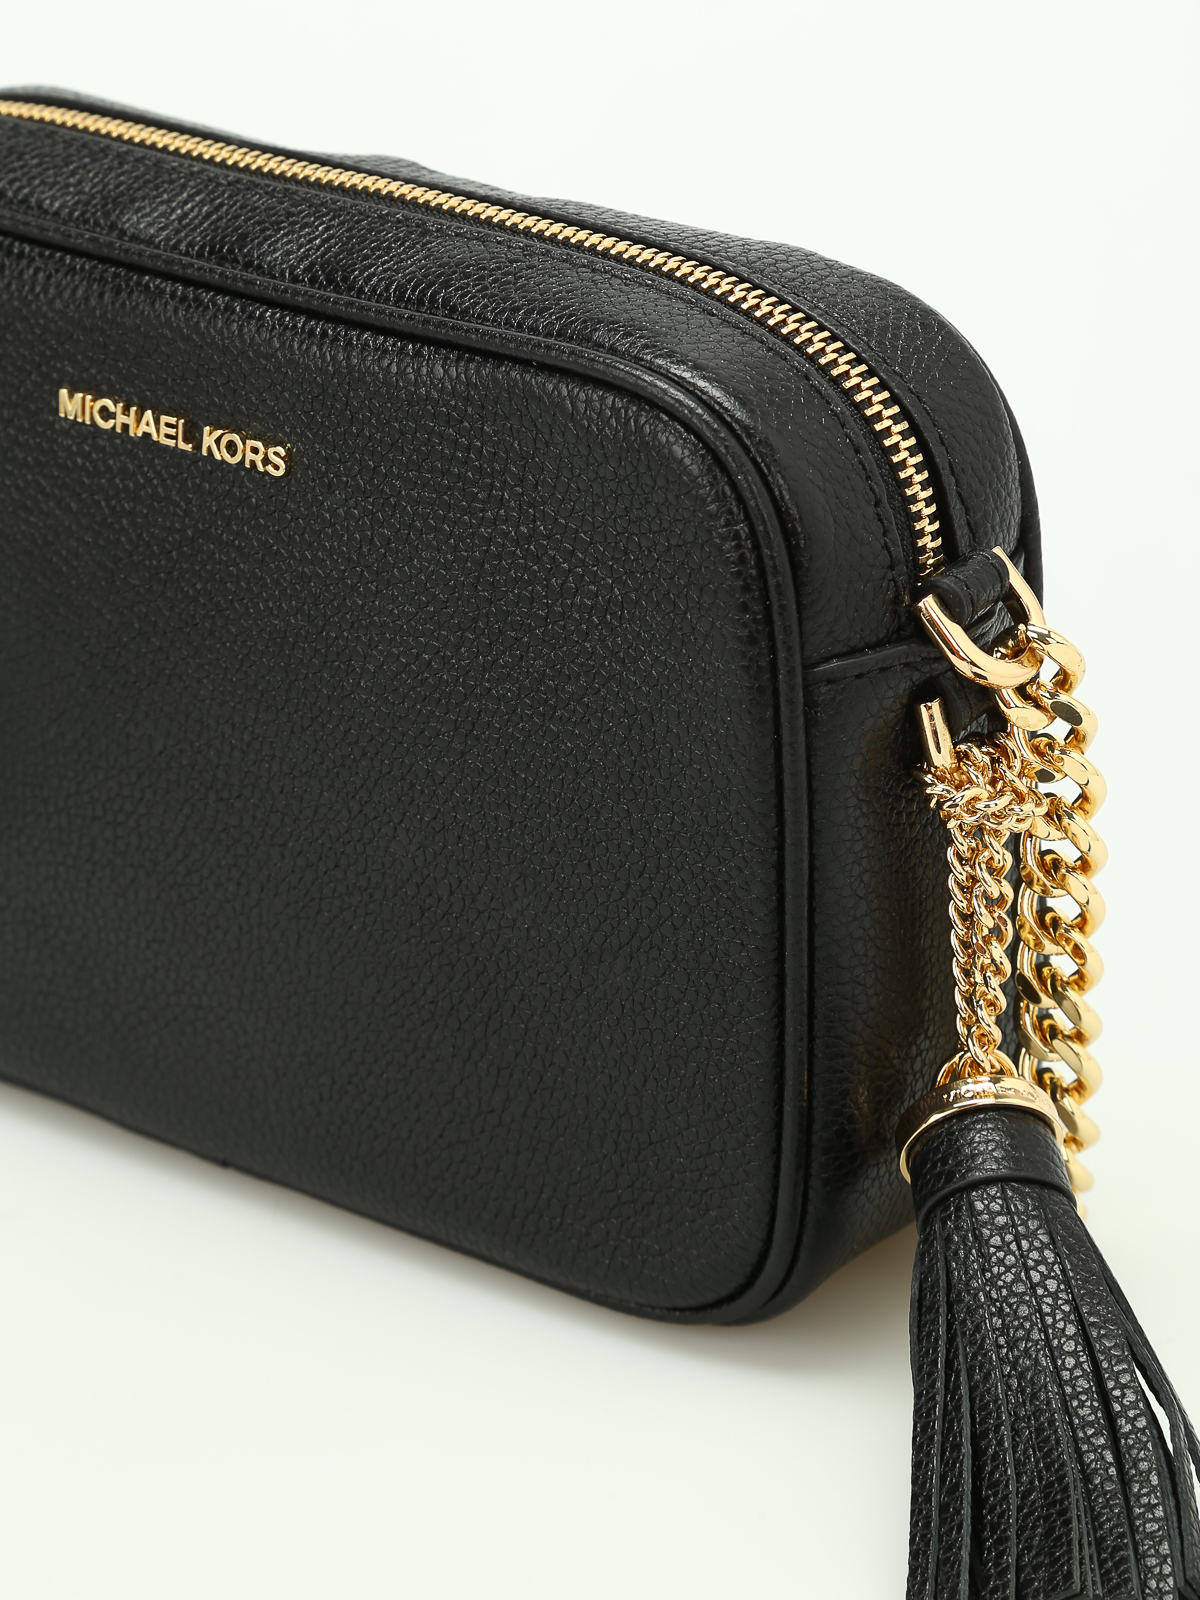 Michael Kors Women's Leather Shoulder Bag